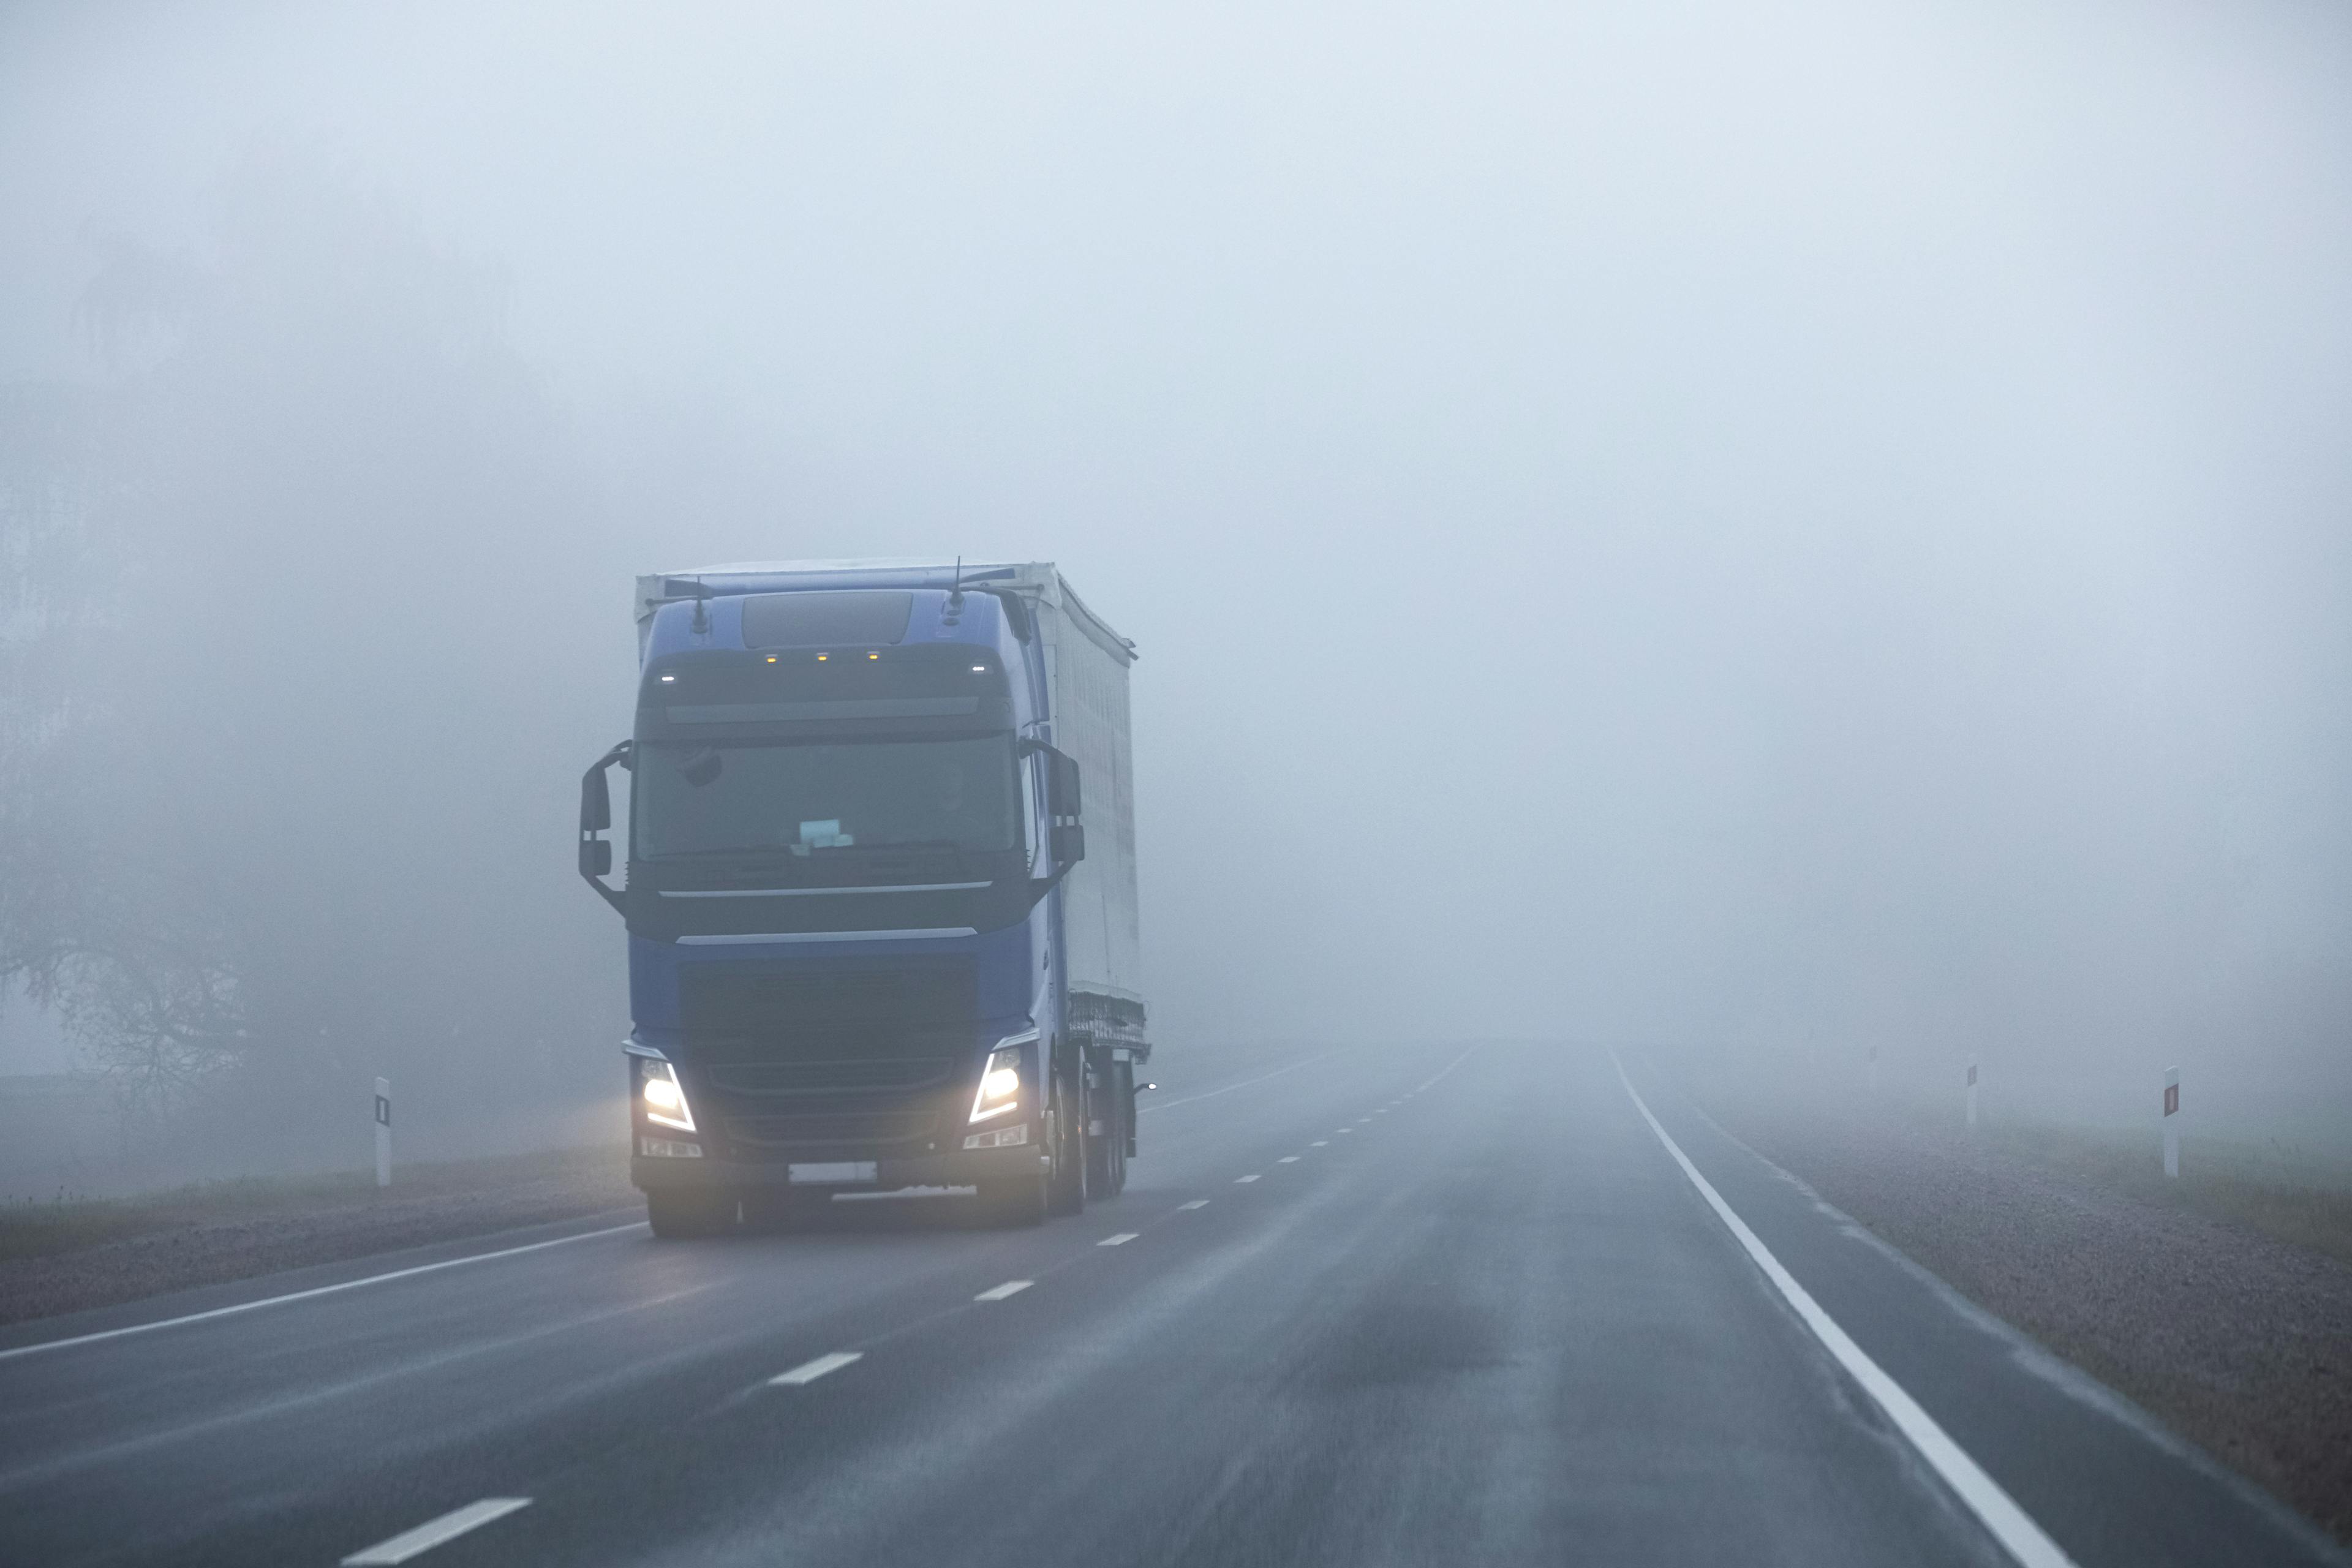 Truck in the fog